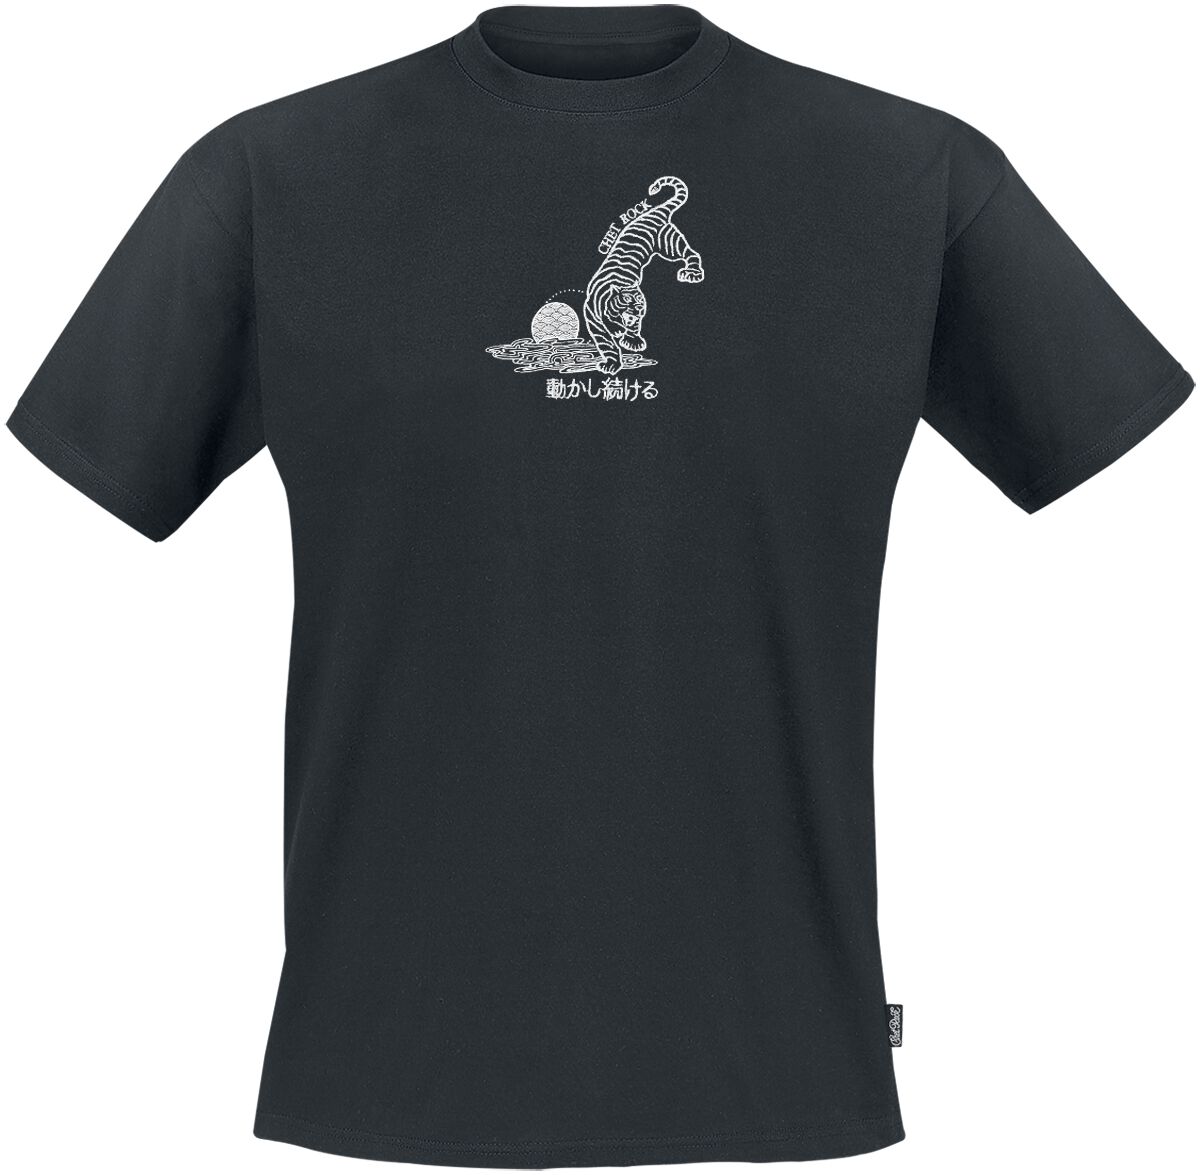 Chet Rock Crouching Tiger T-Shirt schwarz in S